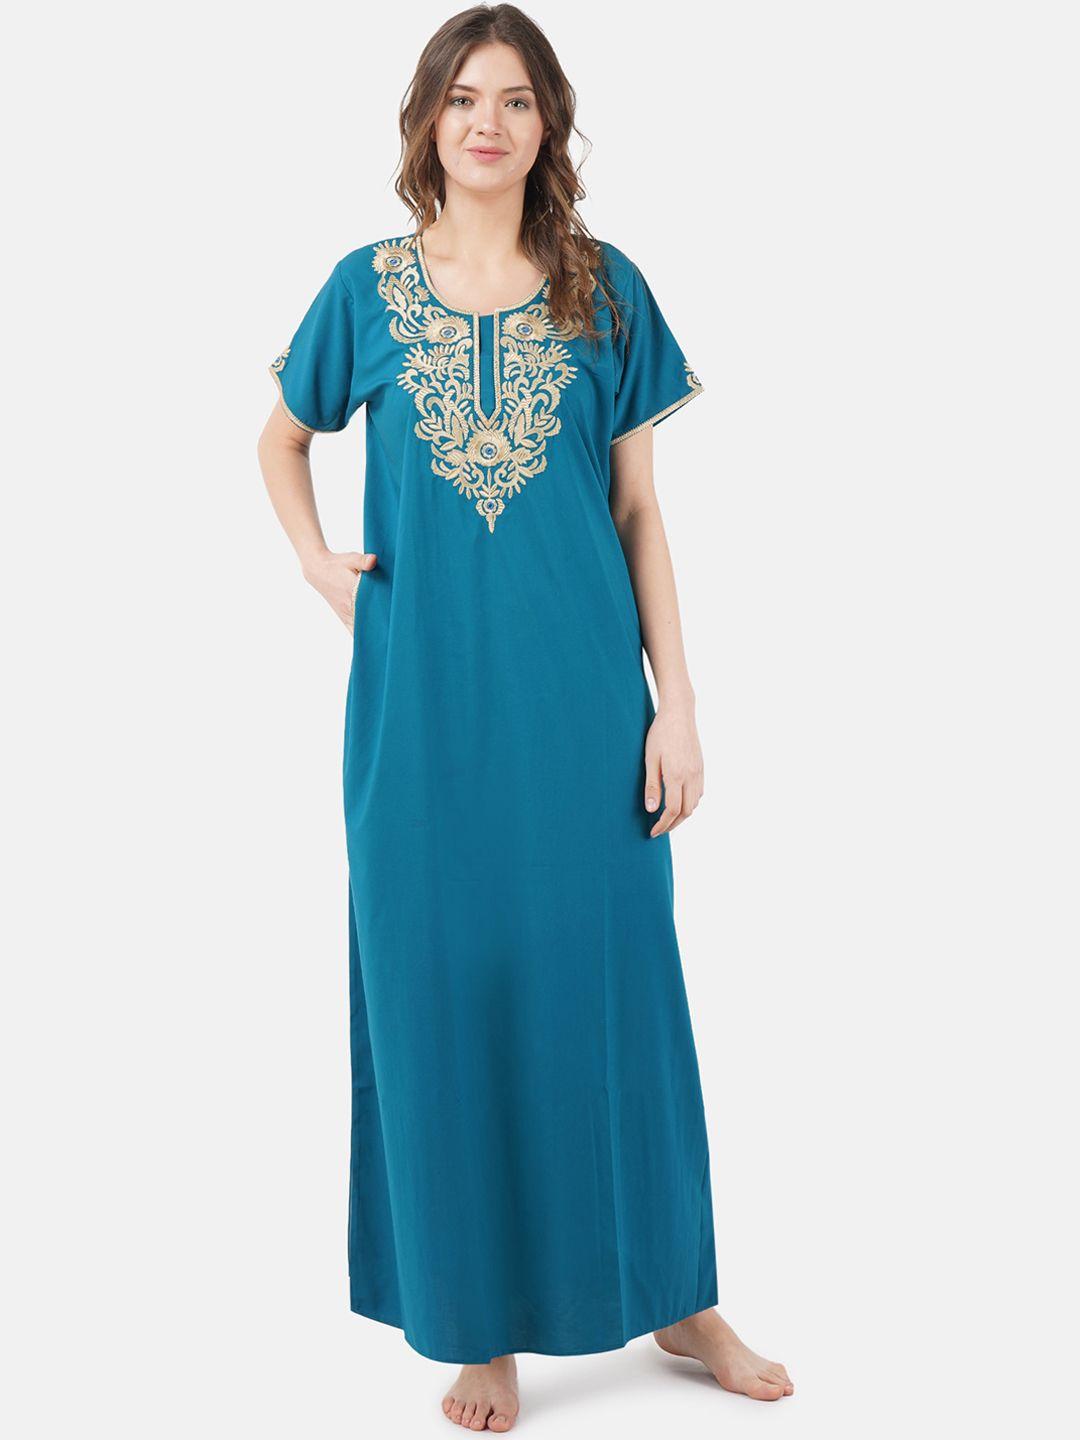 koi sleepwear woman blue embroidered cotton nightdress with pockets